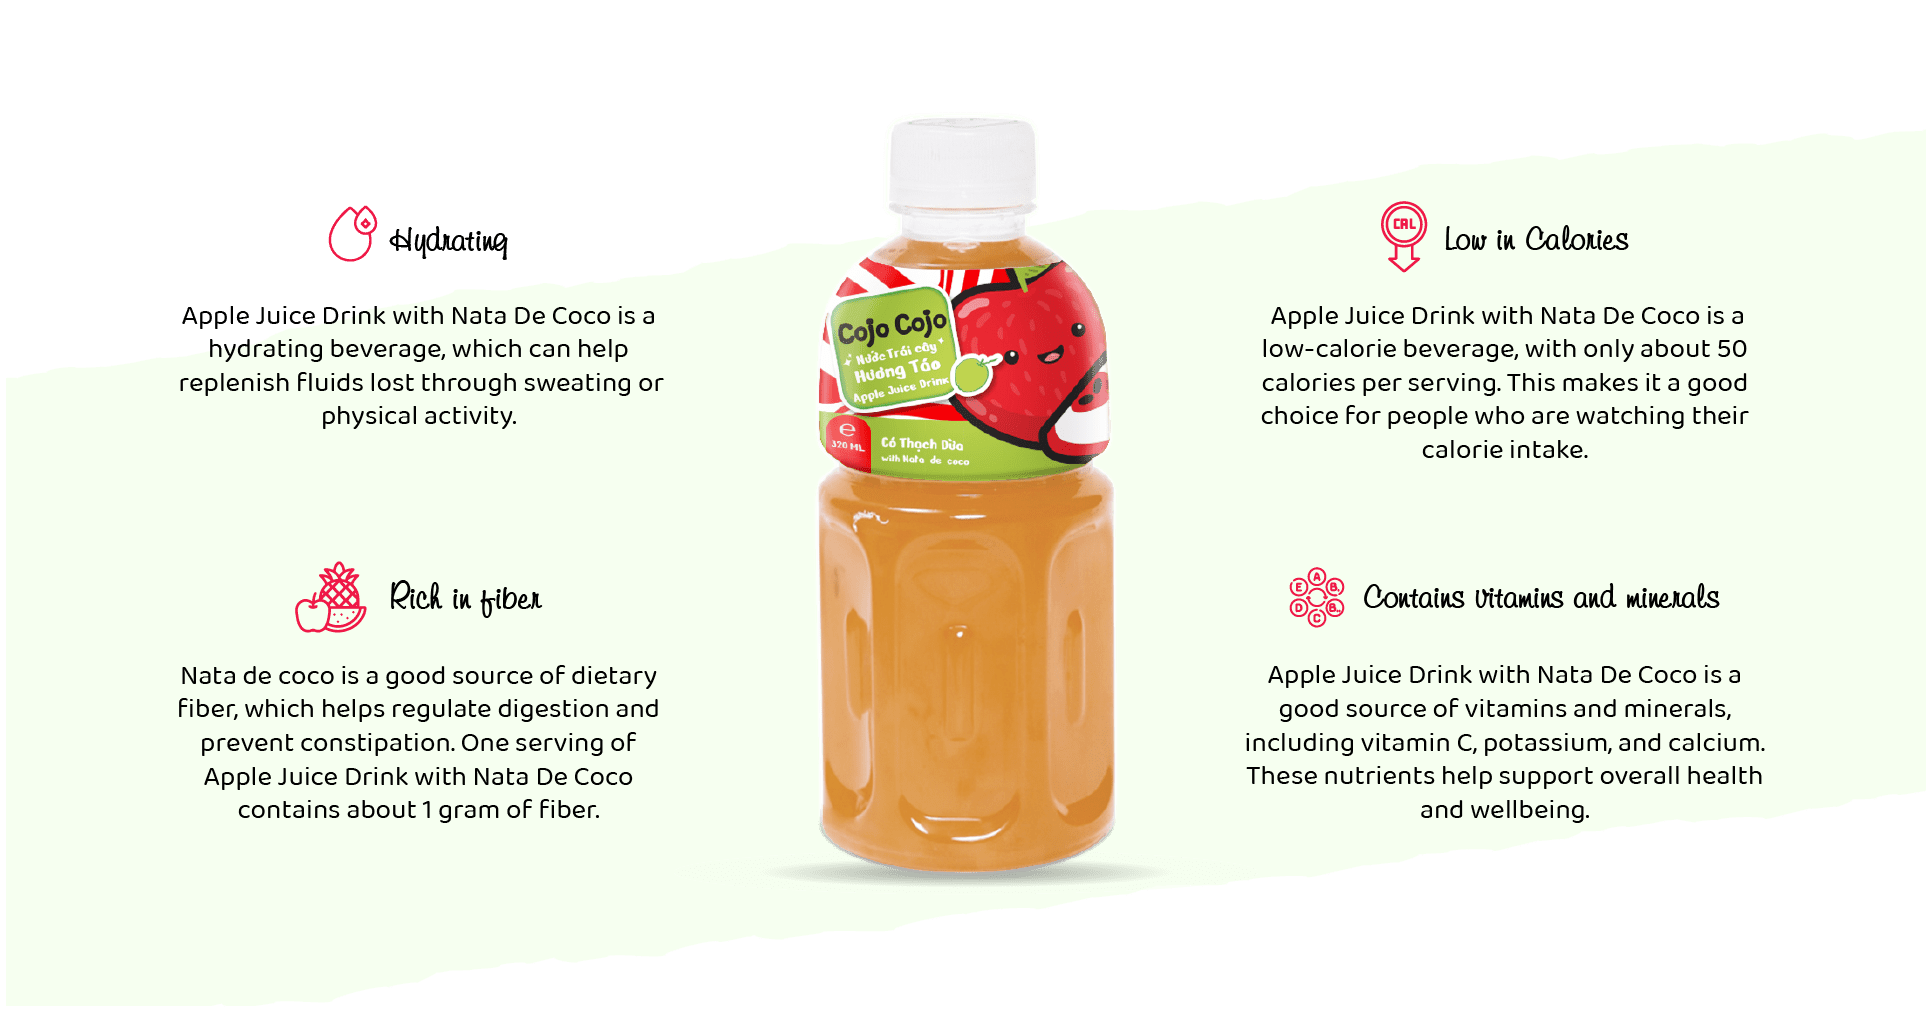 Apple juice with Nata de coco benefits & nutrition facts